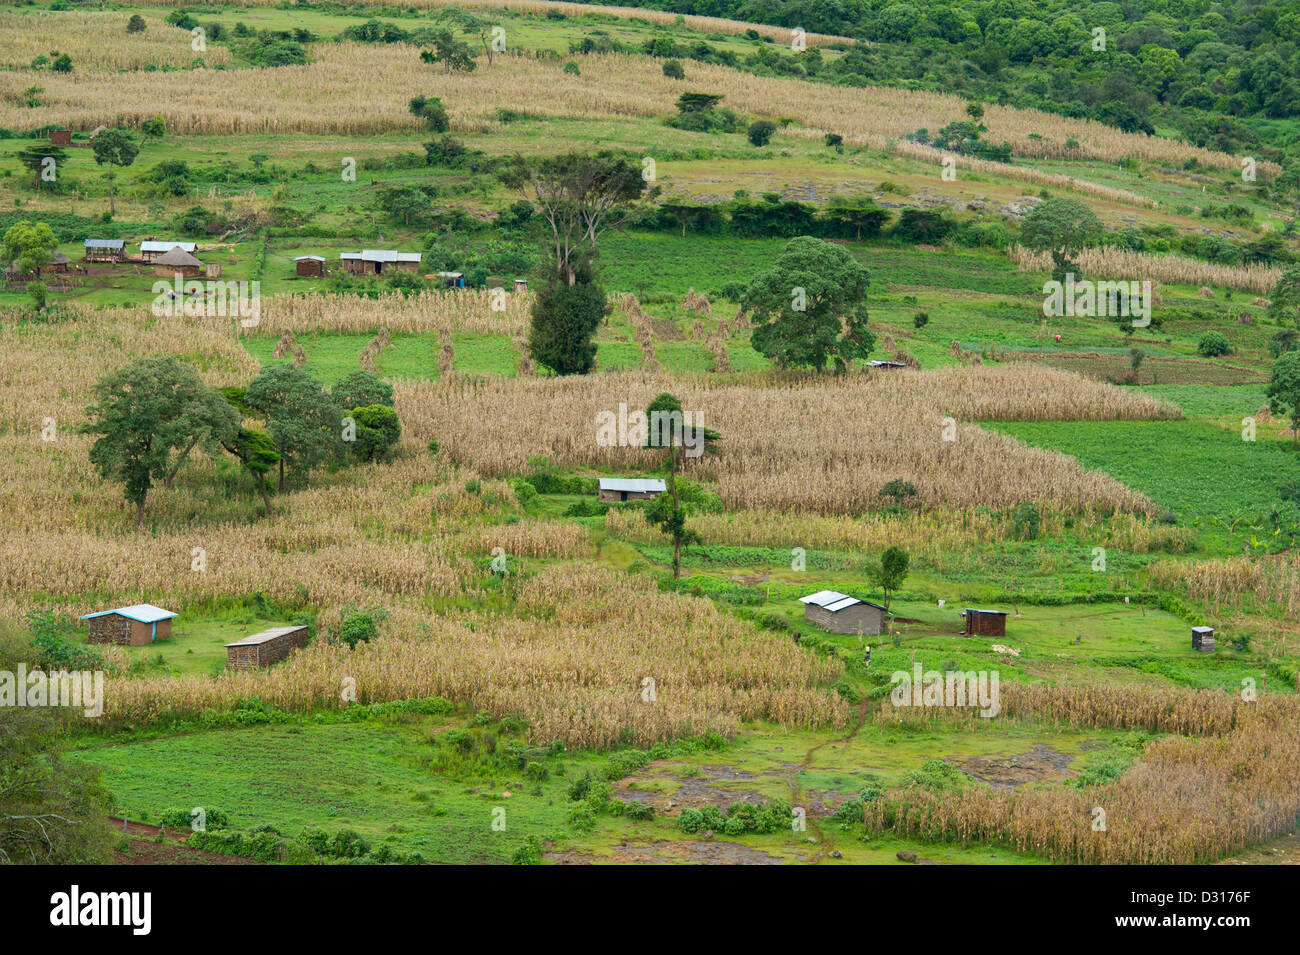 Cultivated land outside Mount Elgon National Park, Kitale, Kenya Stock Photo